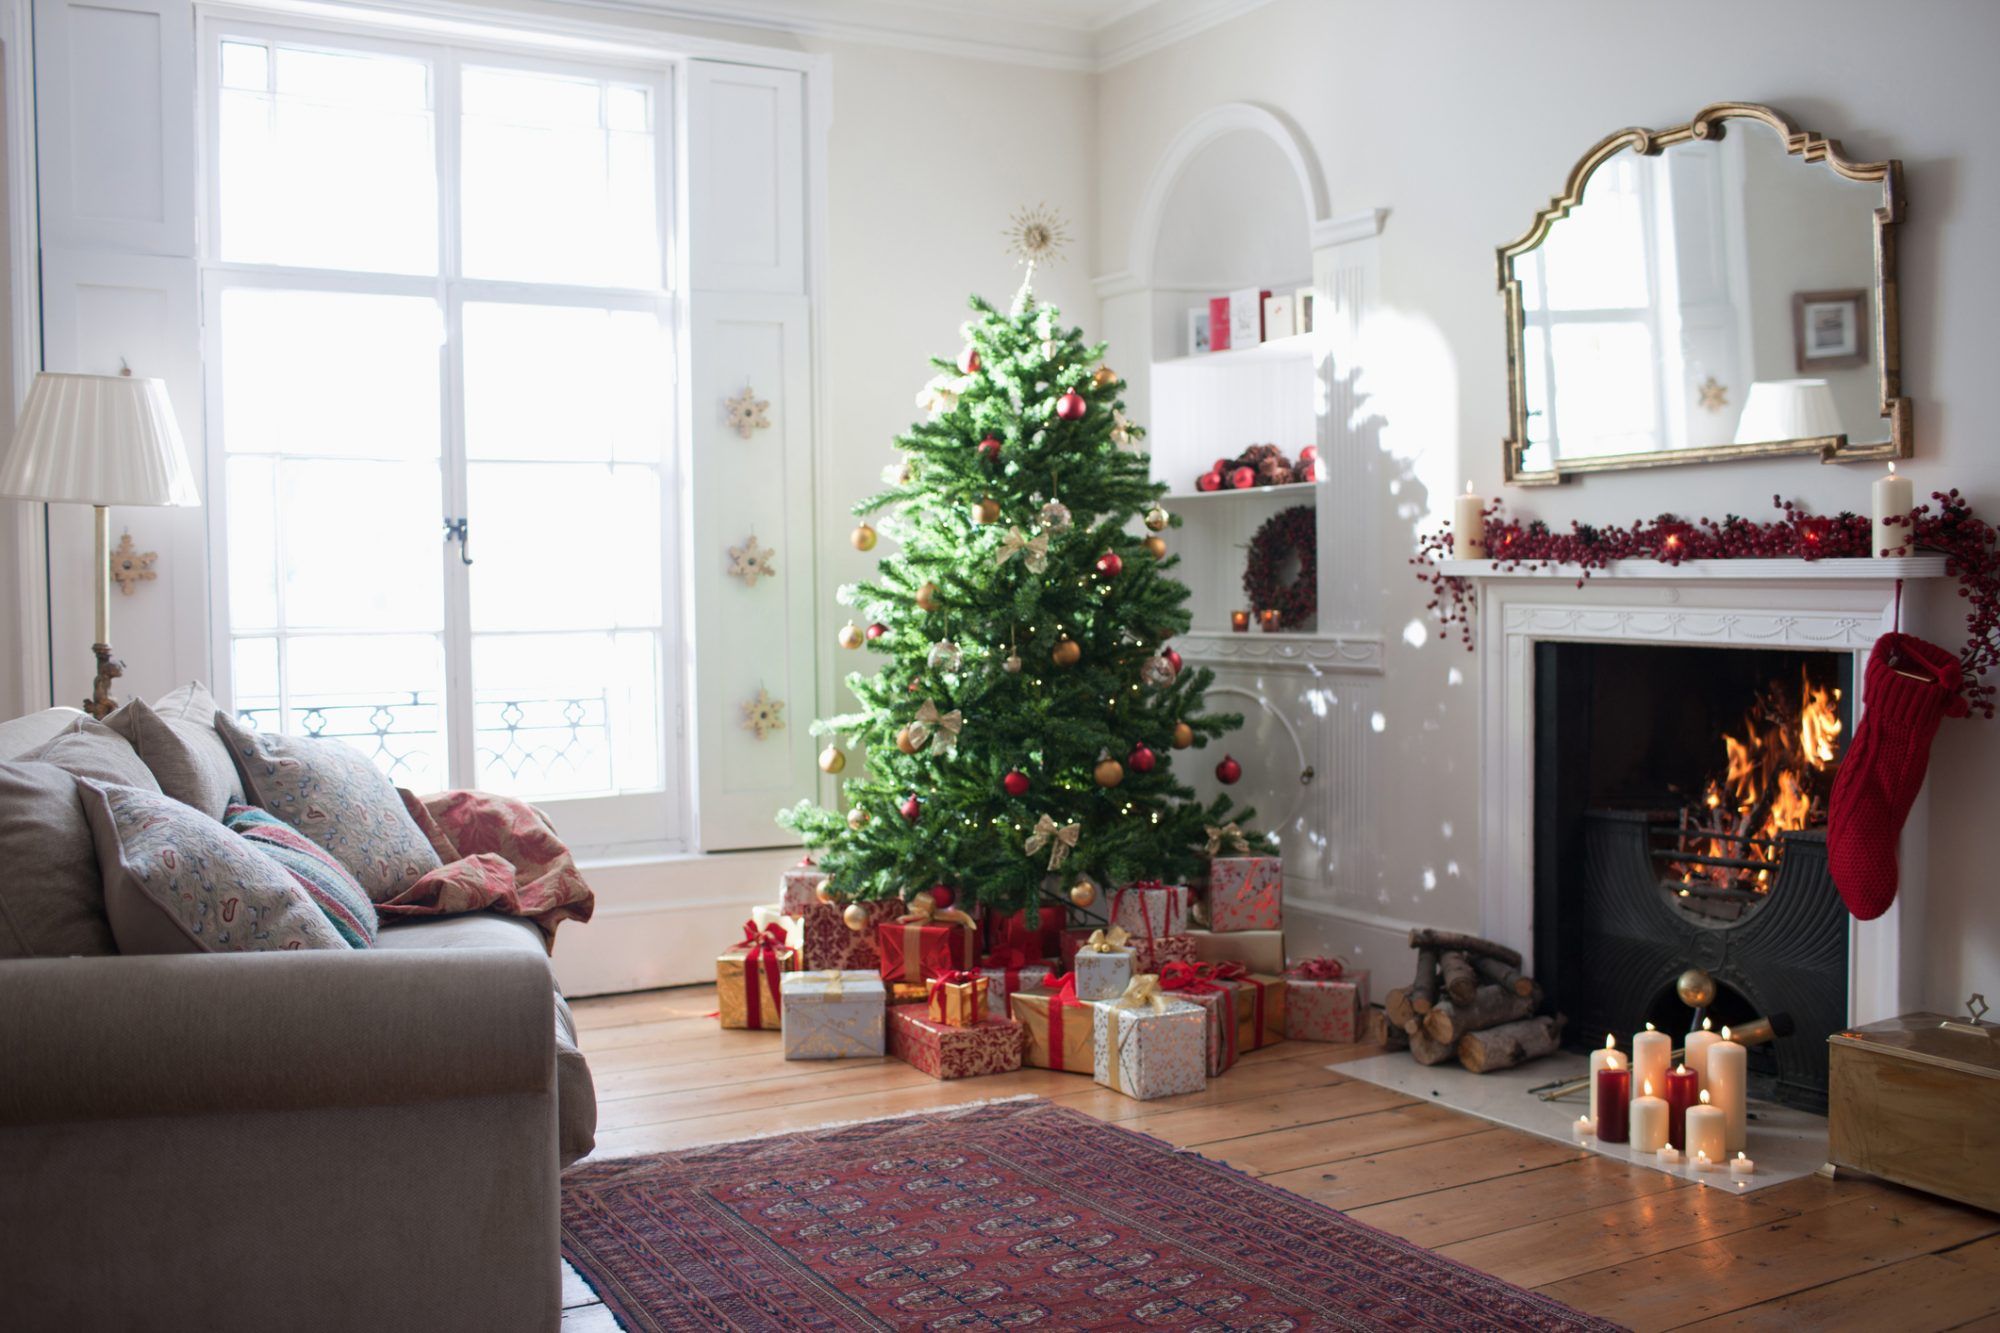 Kako narediti dlje božično drevo, drevo v dnevni sobi